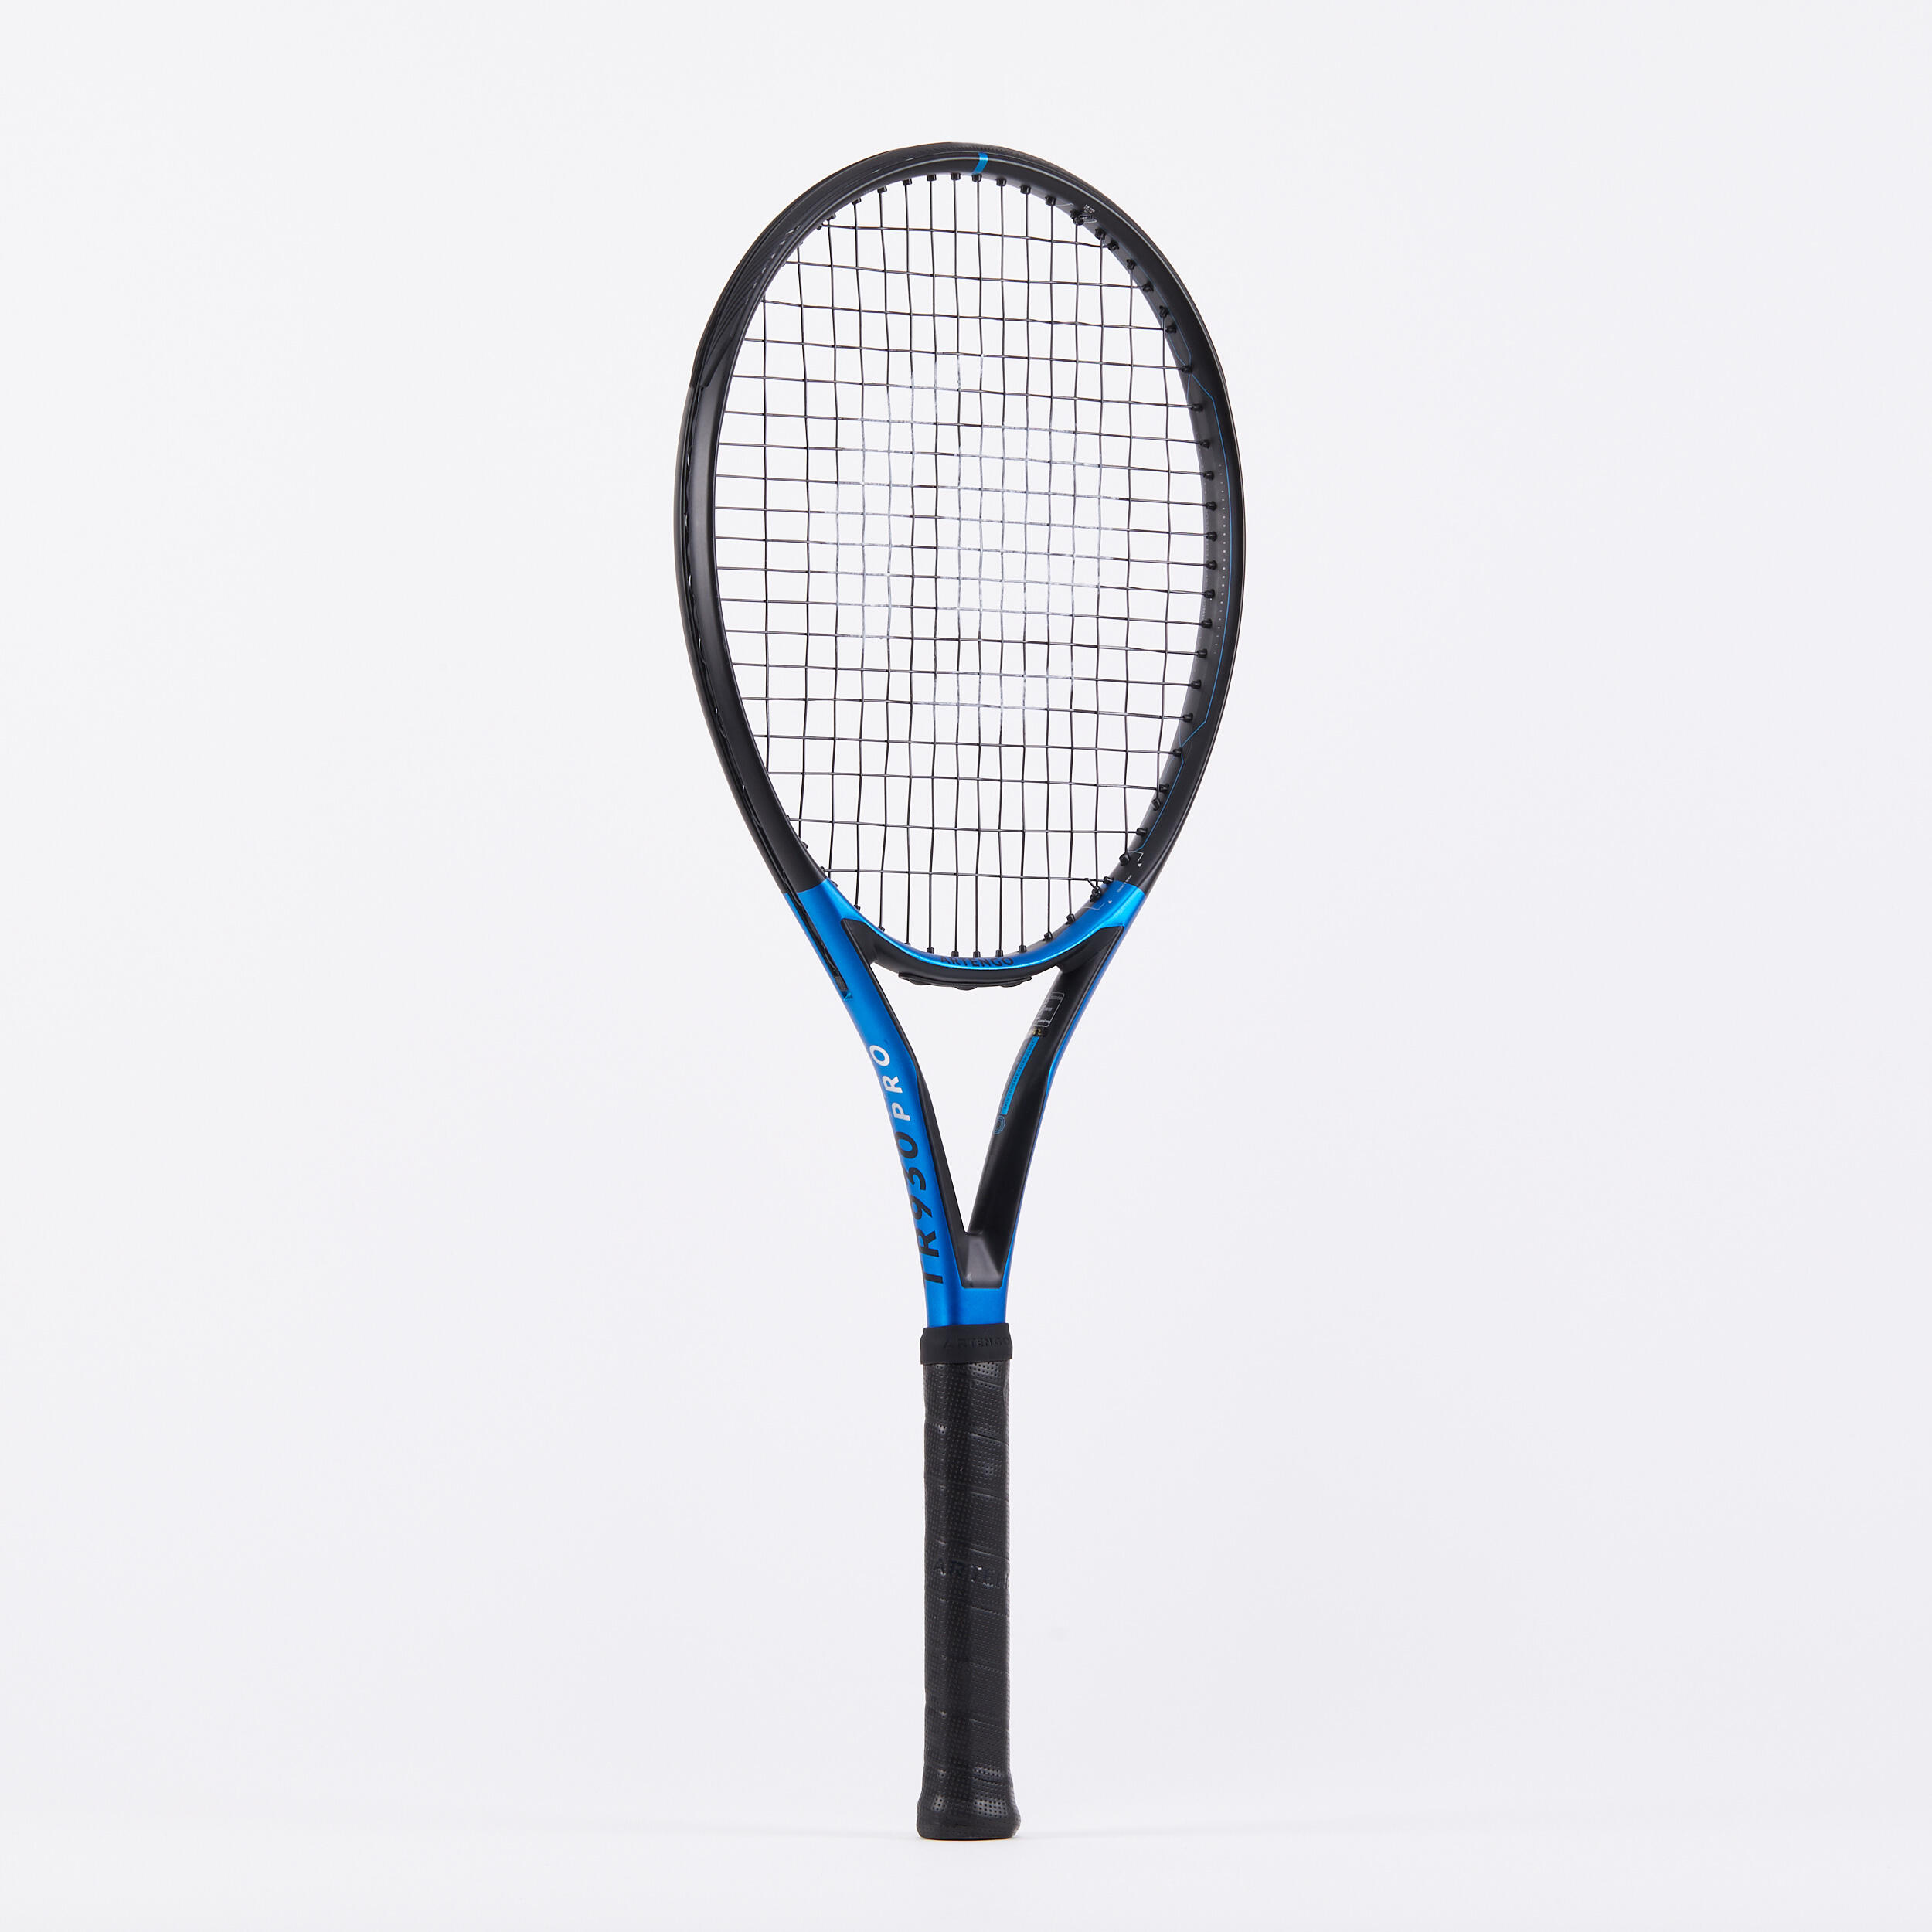 Tennis Racket 300 g - TR 930 Spin Pro Black/Blue